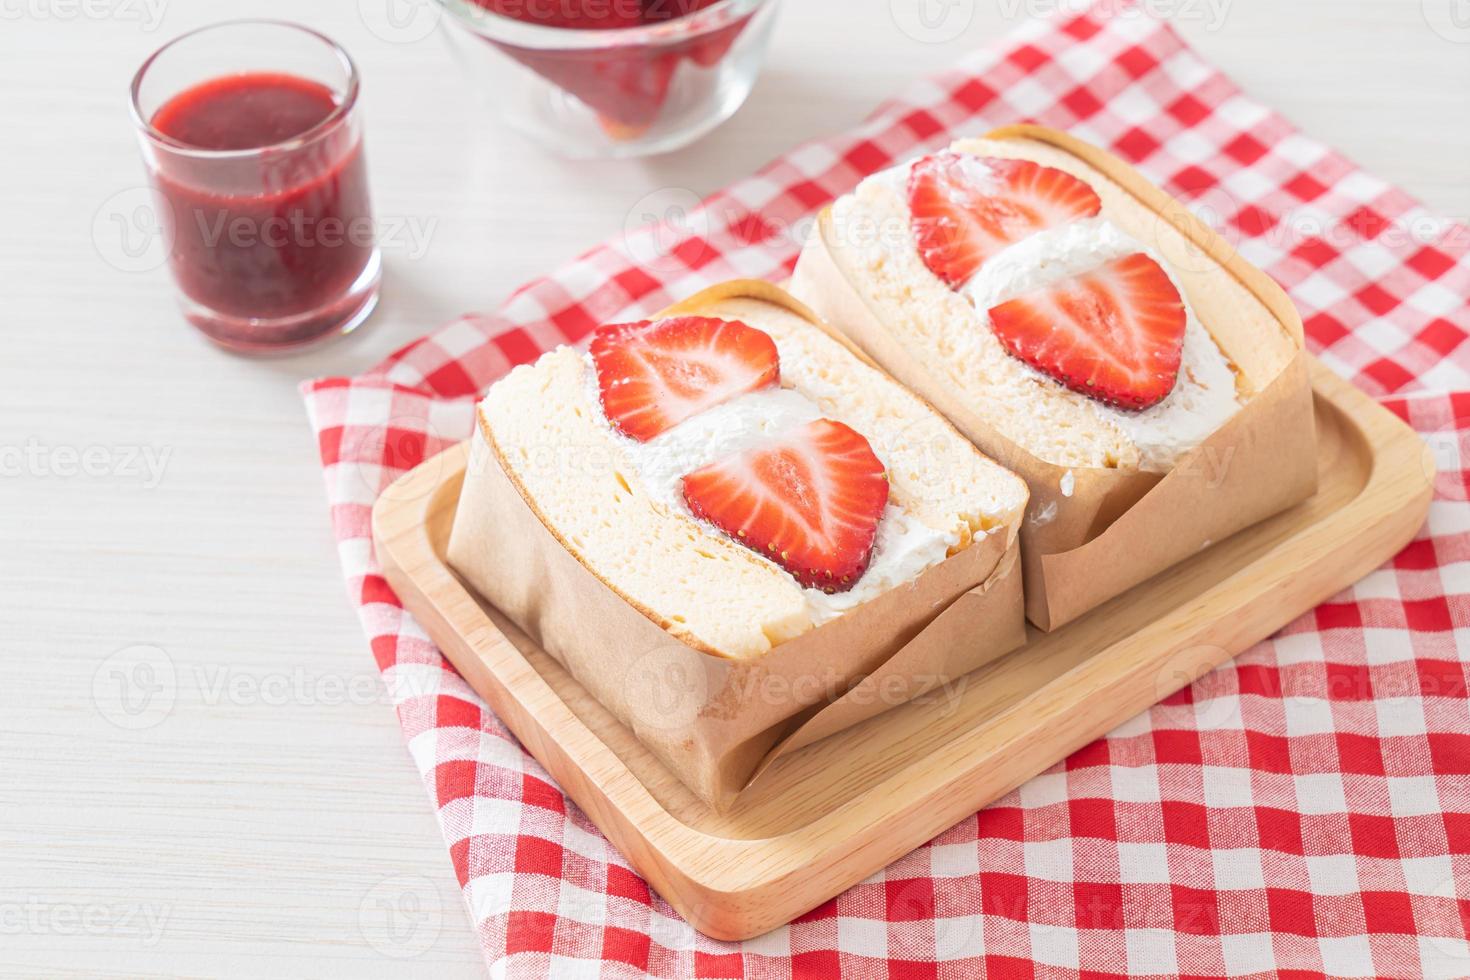 sándwich de panqueque crema fresca de fresa foto